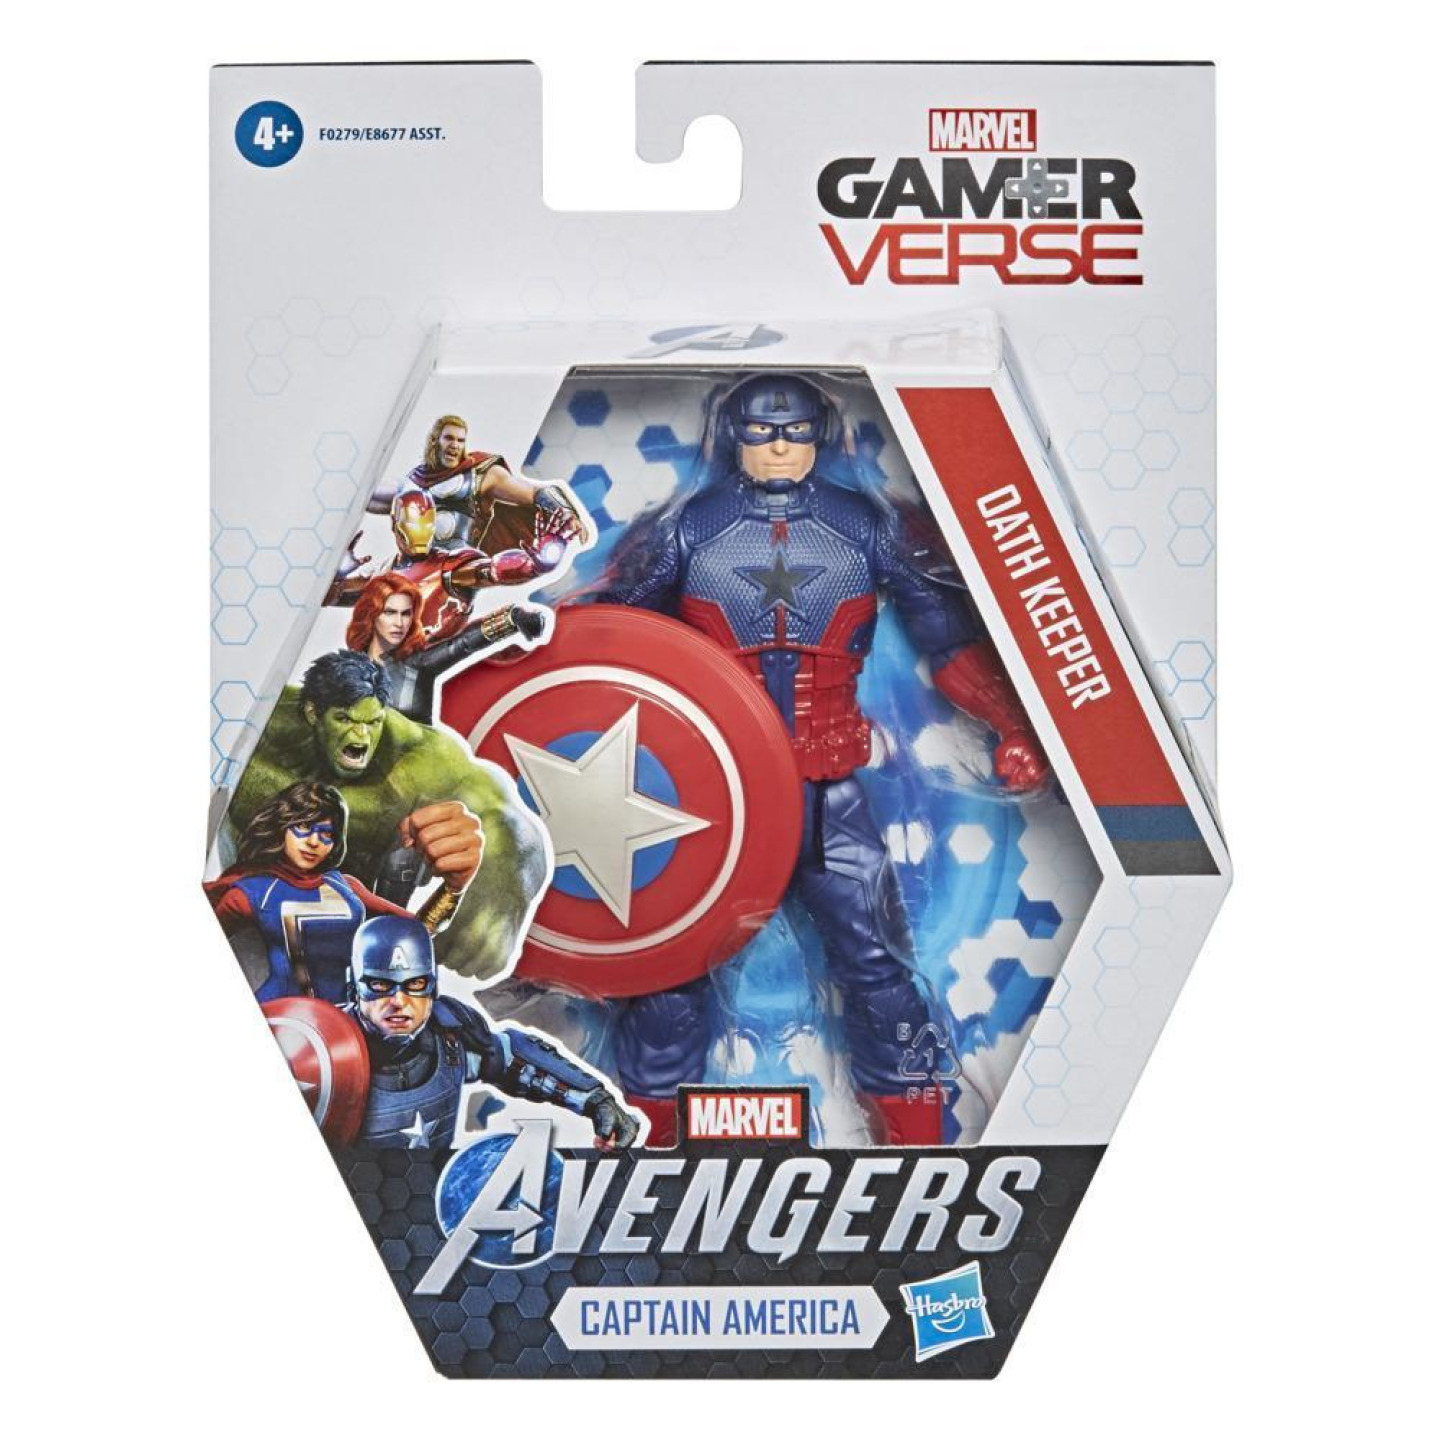 Avengers akční figurka Kapitán Amerika OATH KEEPER 15cm, Hasbro F0279